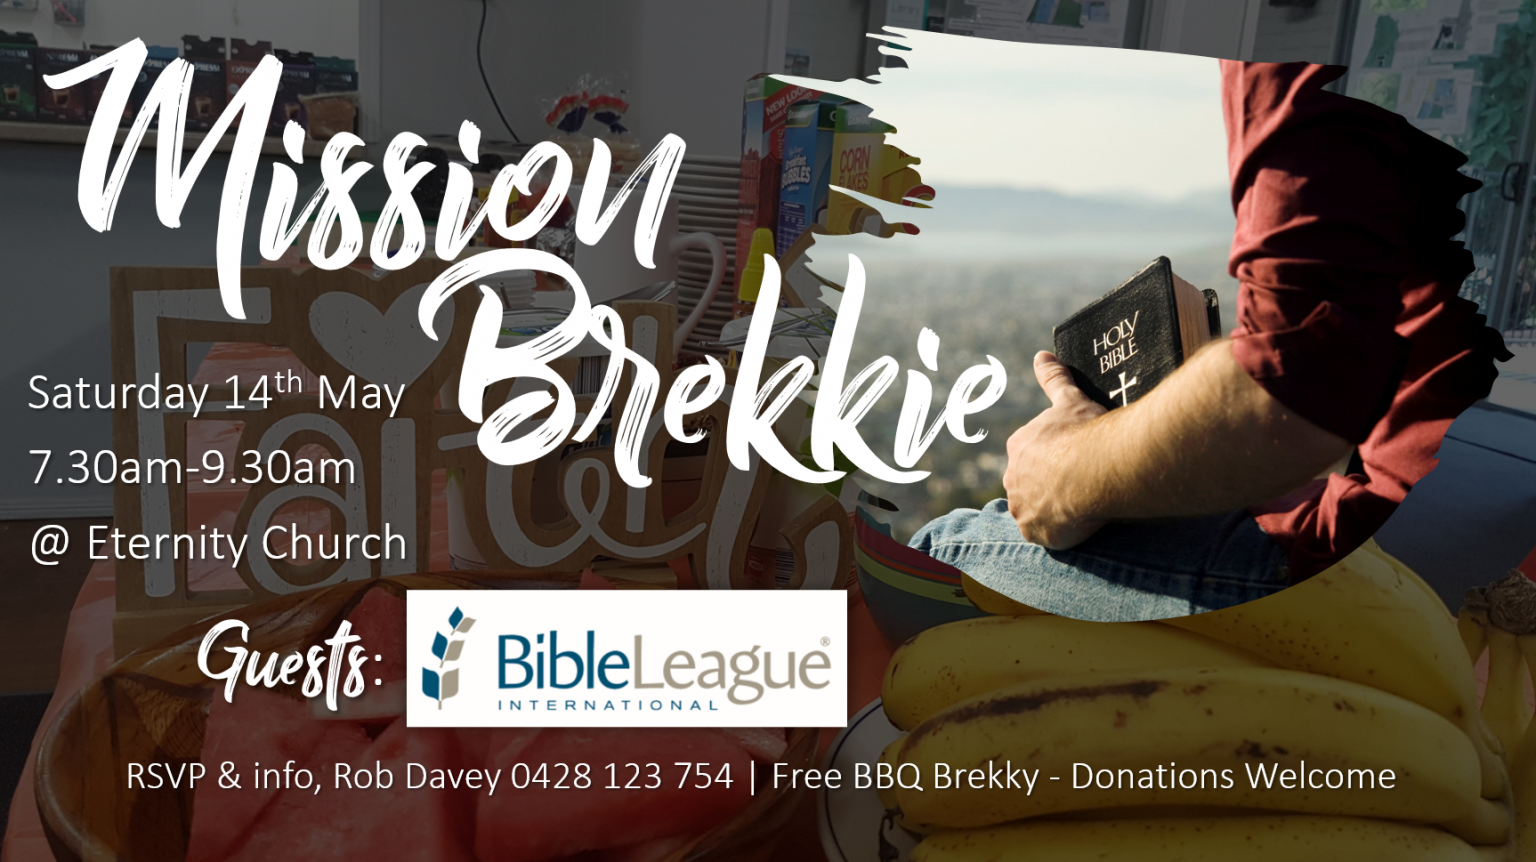 MISSION BREKKIE - Saturday May 14th